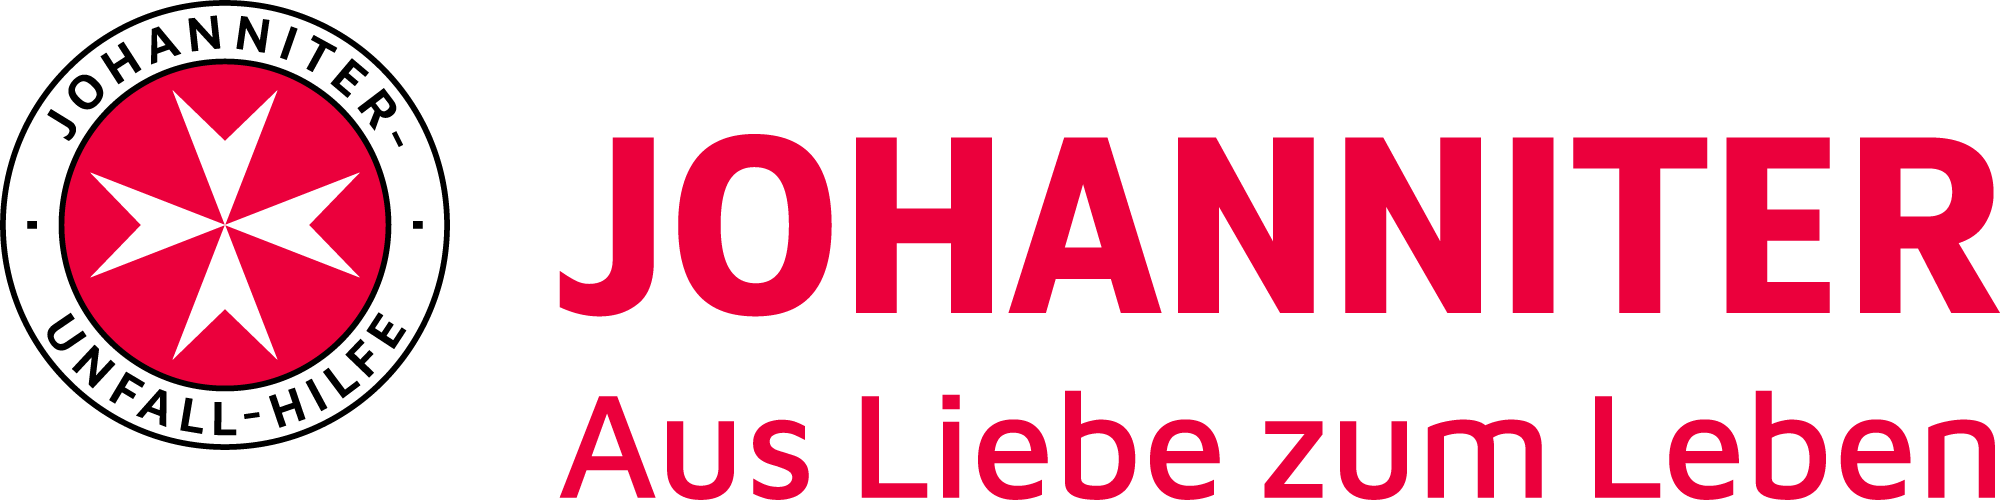 Johanniter-Unfall-Hilfe e.V. Landesverband Niedersachsen/Bremen Logo